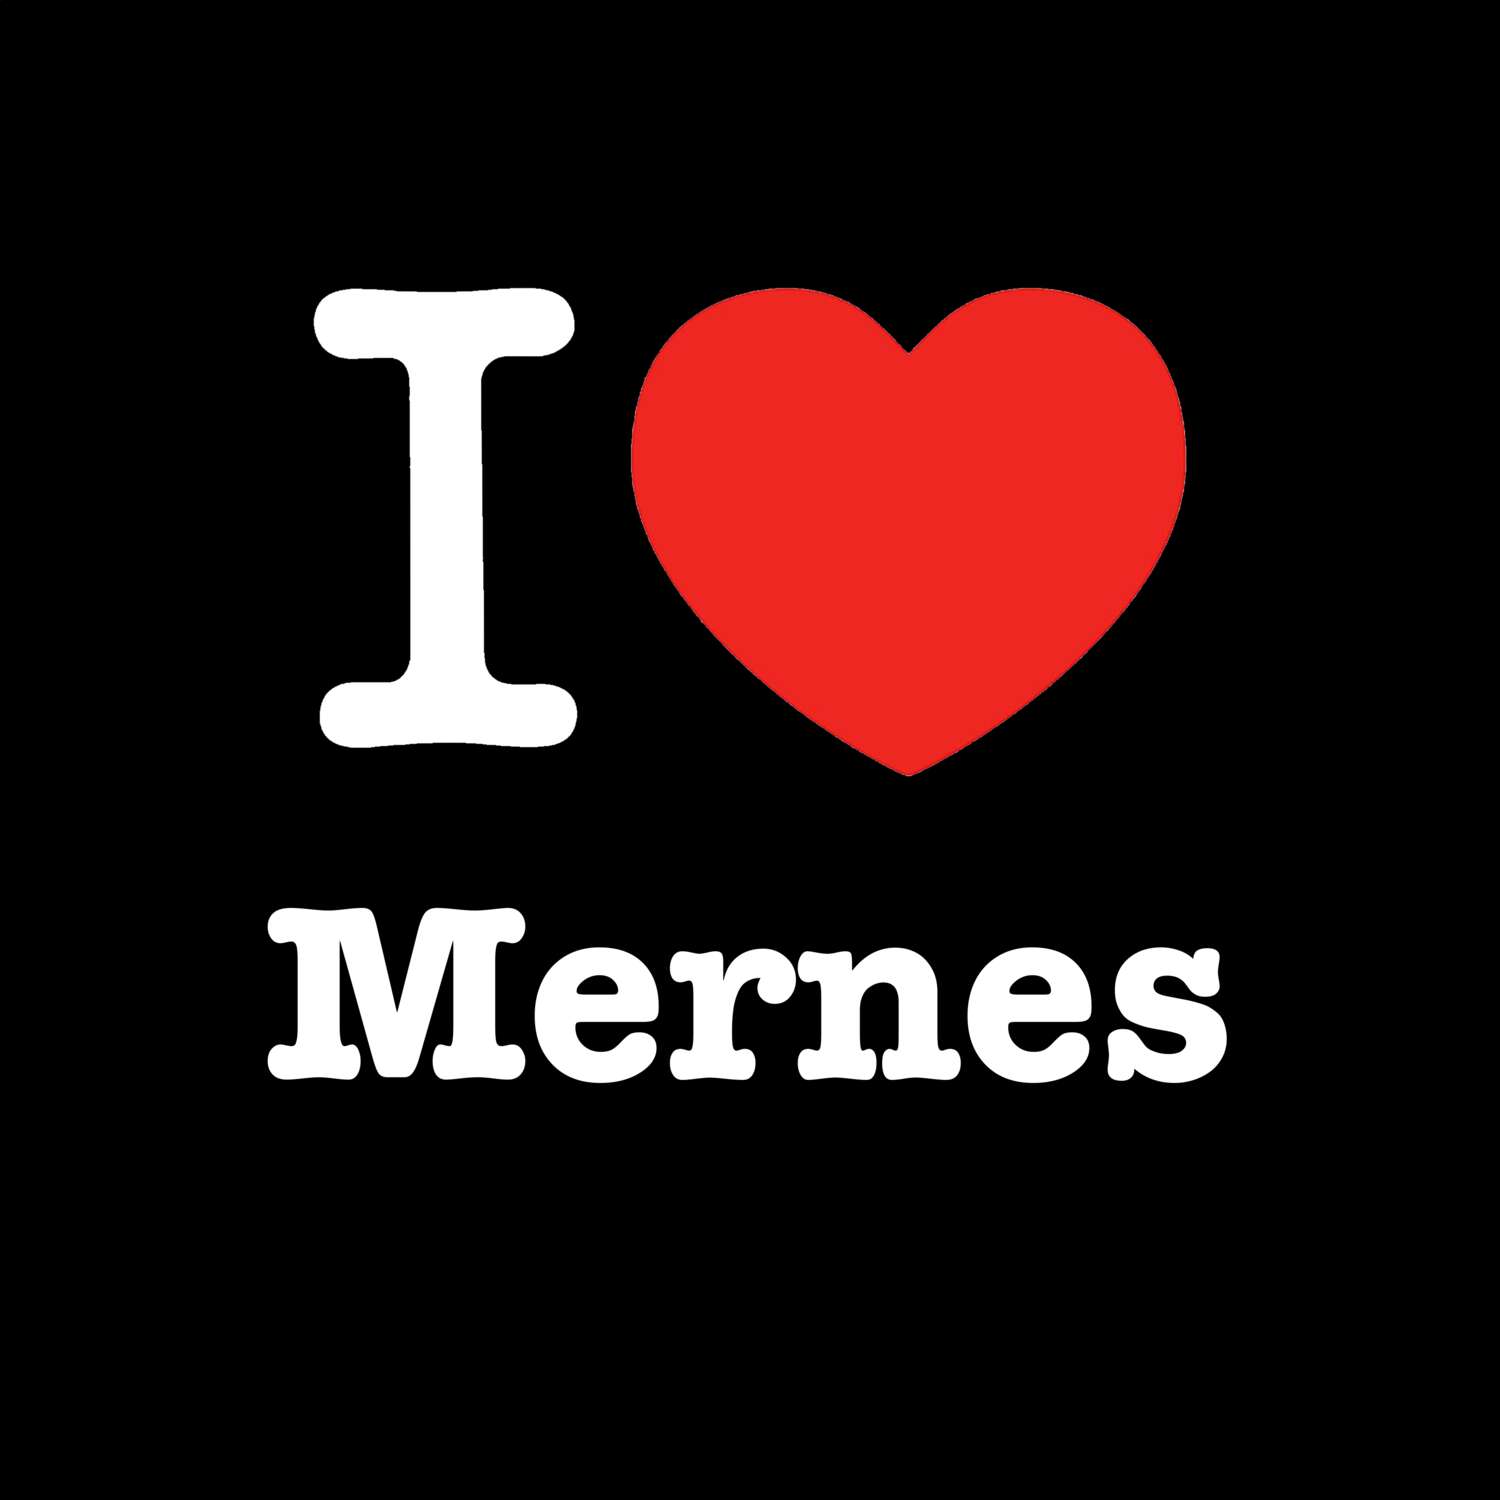 Mernes T-Shirt »I love«